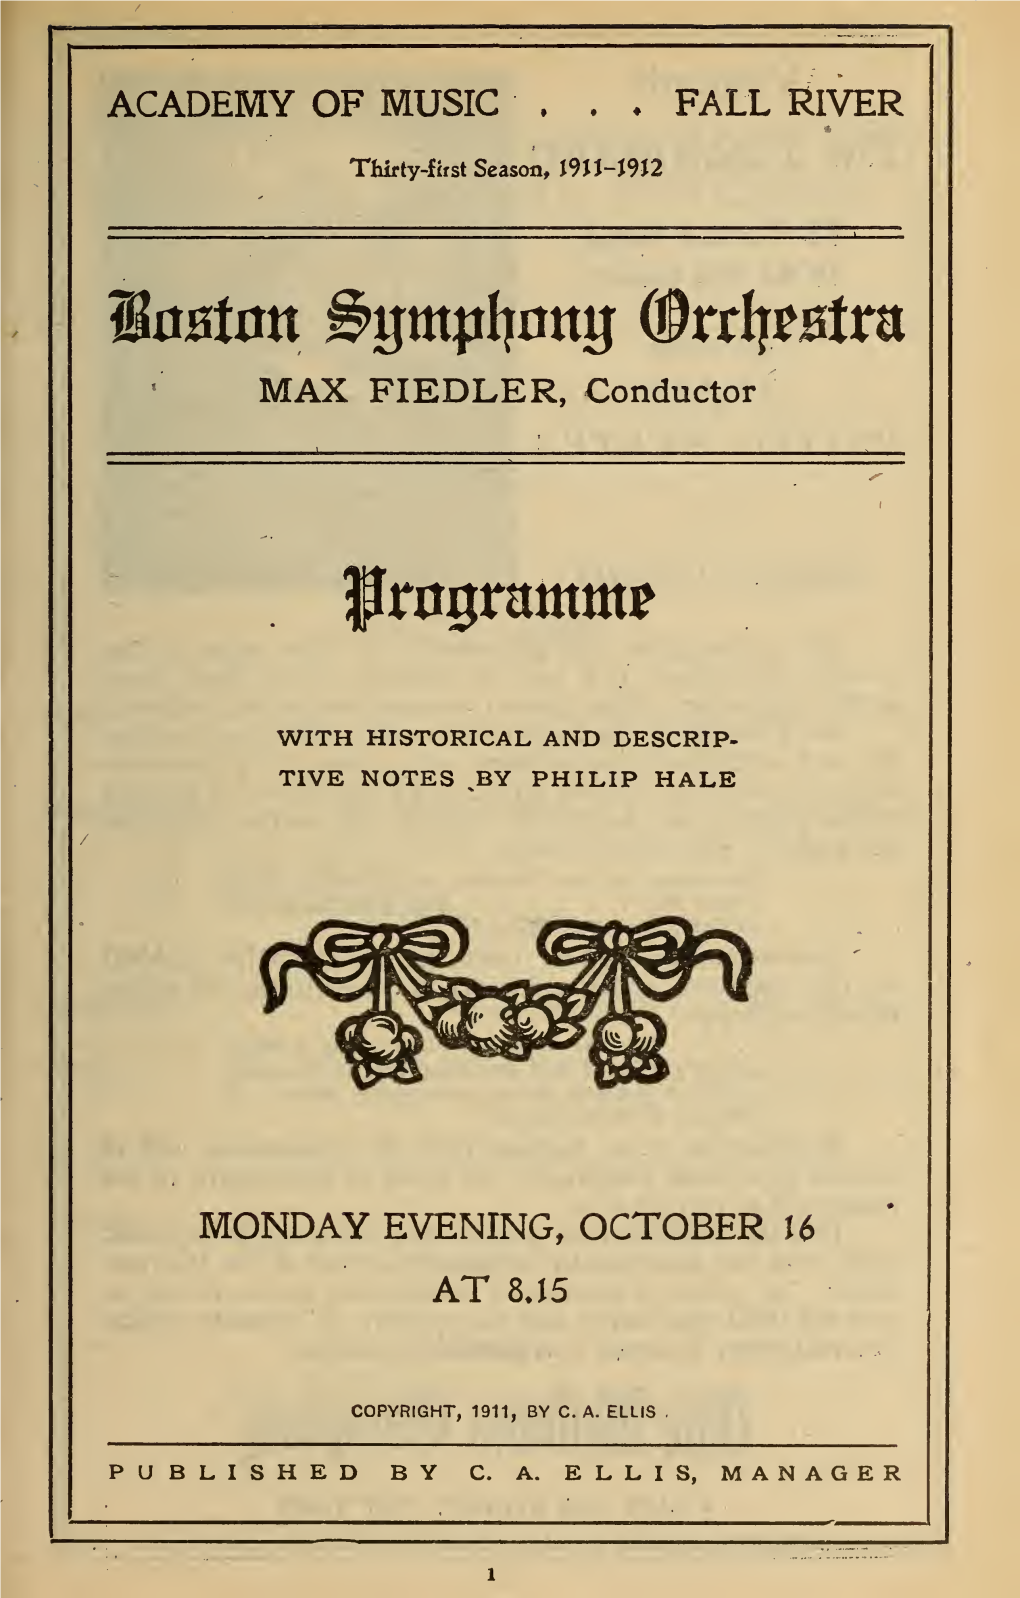 Boston Symphony Orchestra Concert Programs, Season 31,1911-1912, Trip